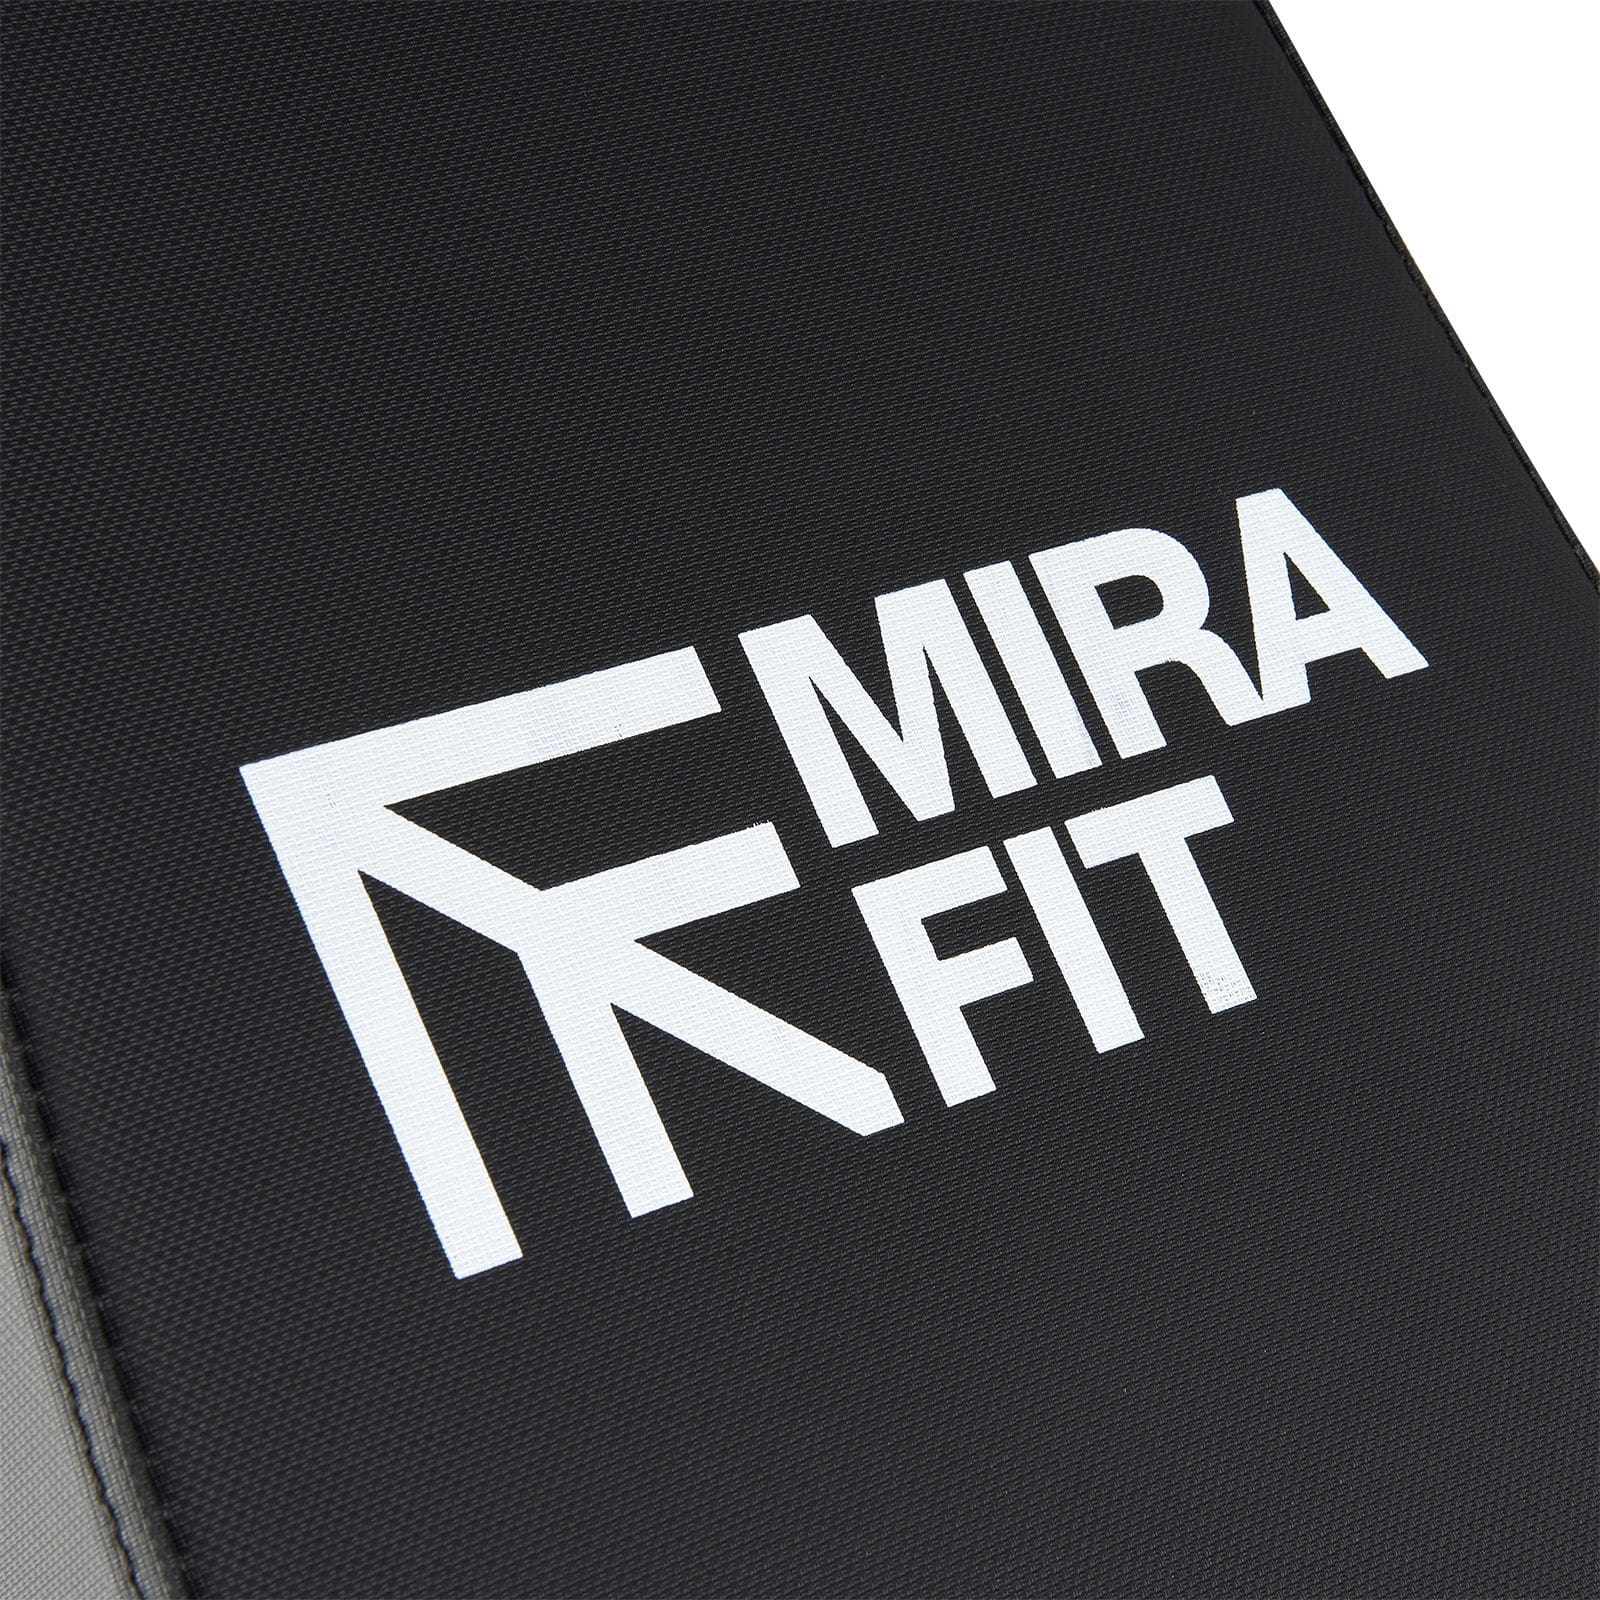 Mirafit M350 Adjustable Weight Bench - Up Close